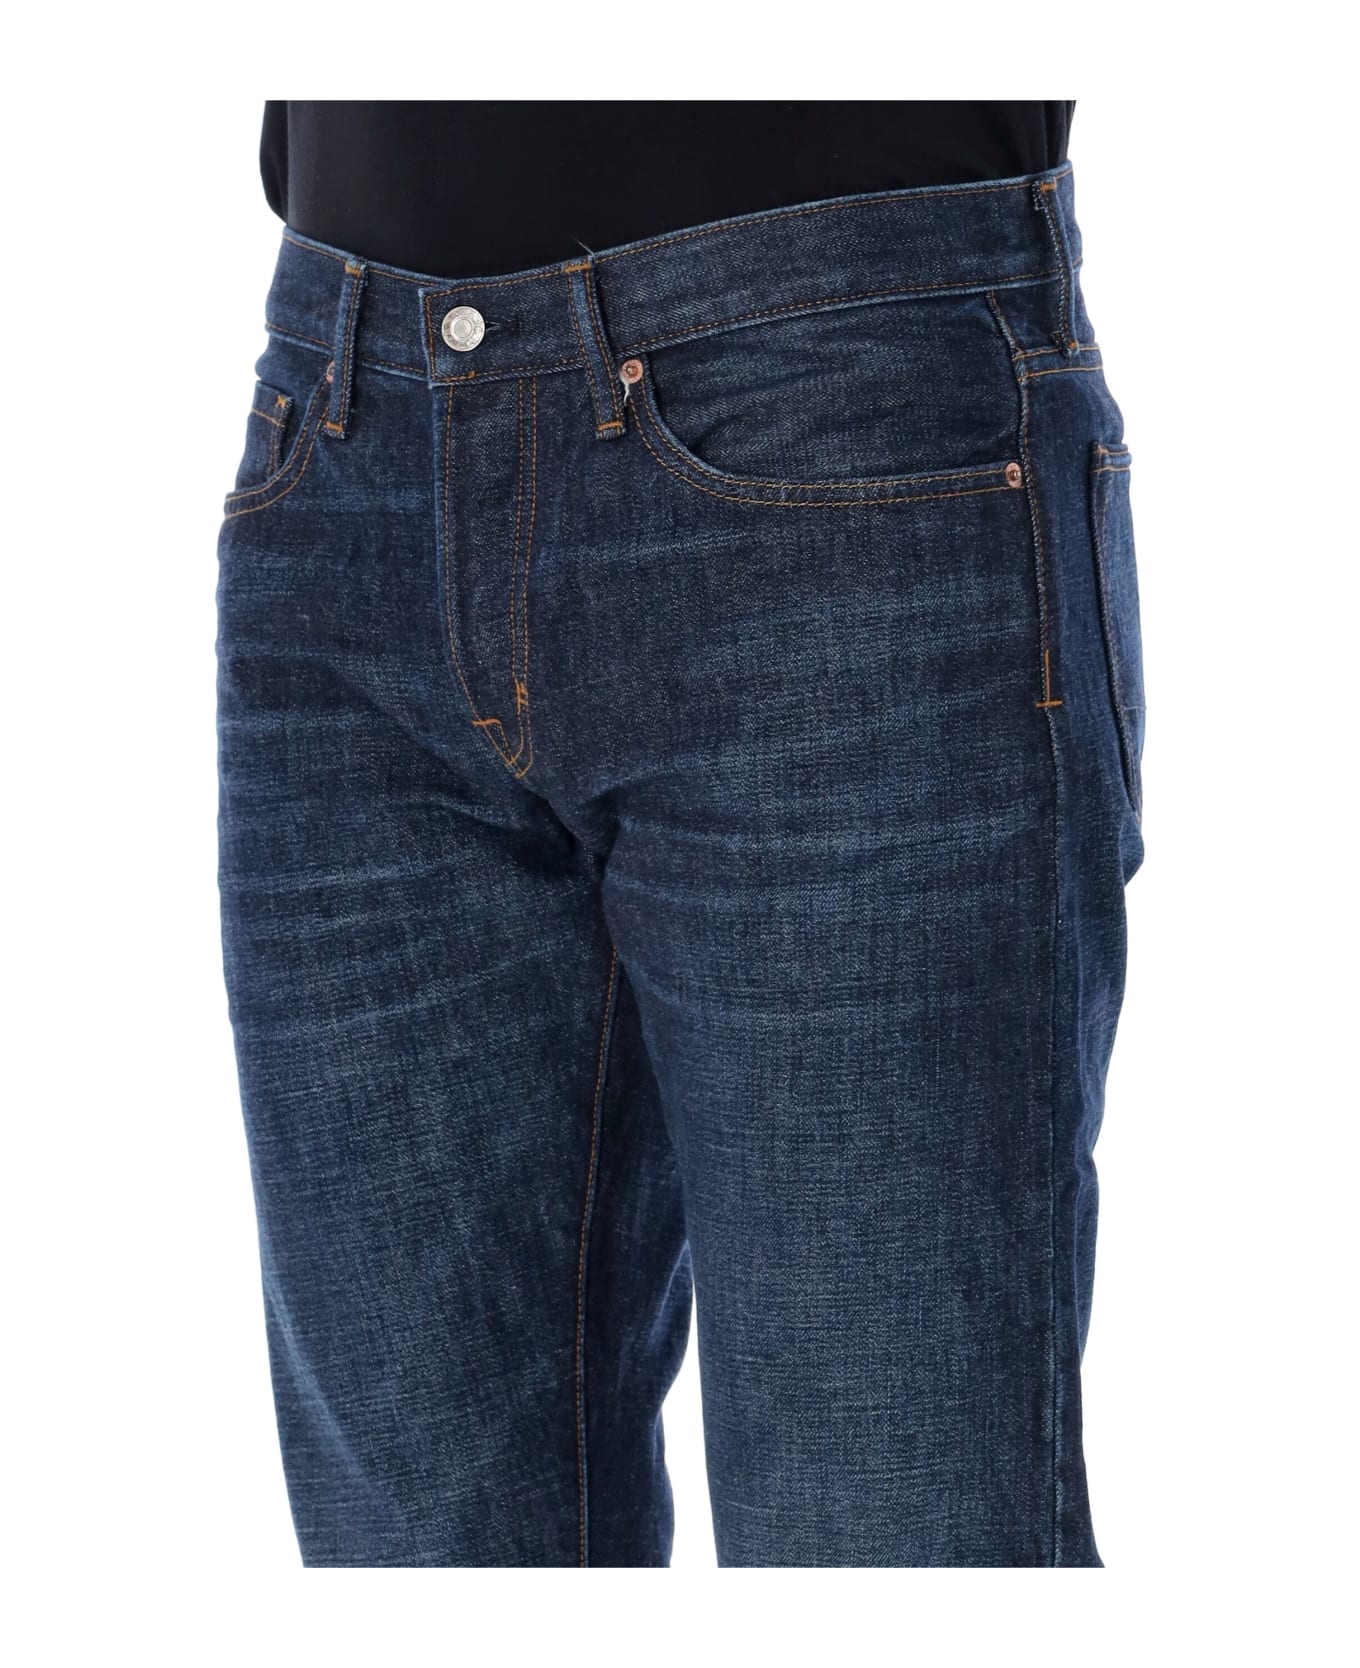 Tom Ford Slim Denim Jeans - INDIGO WASHED